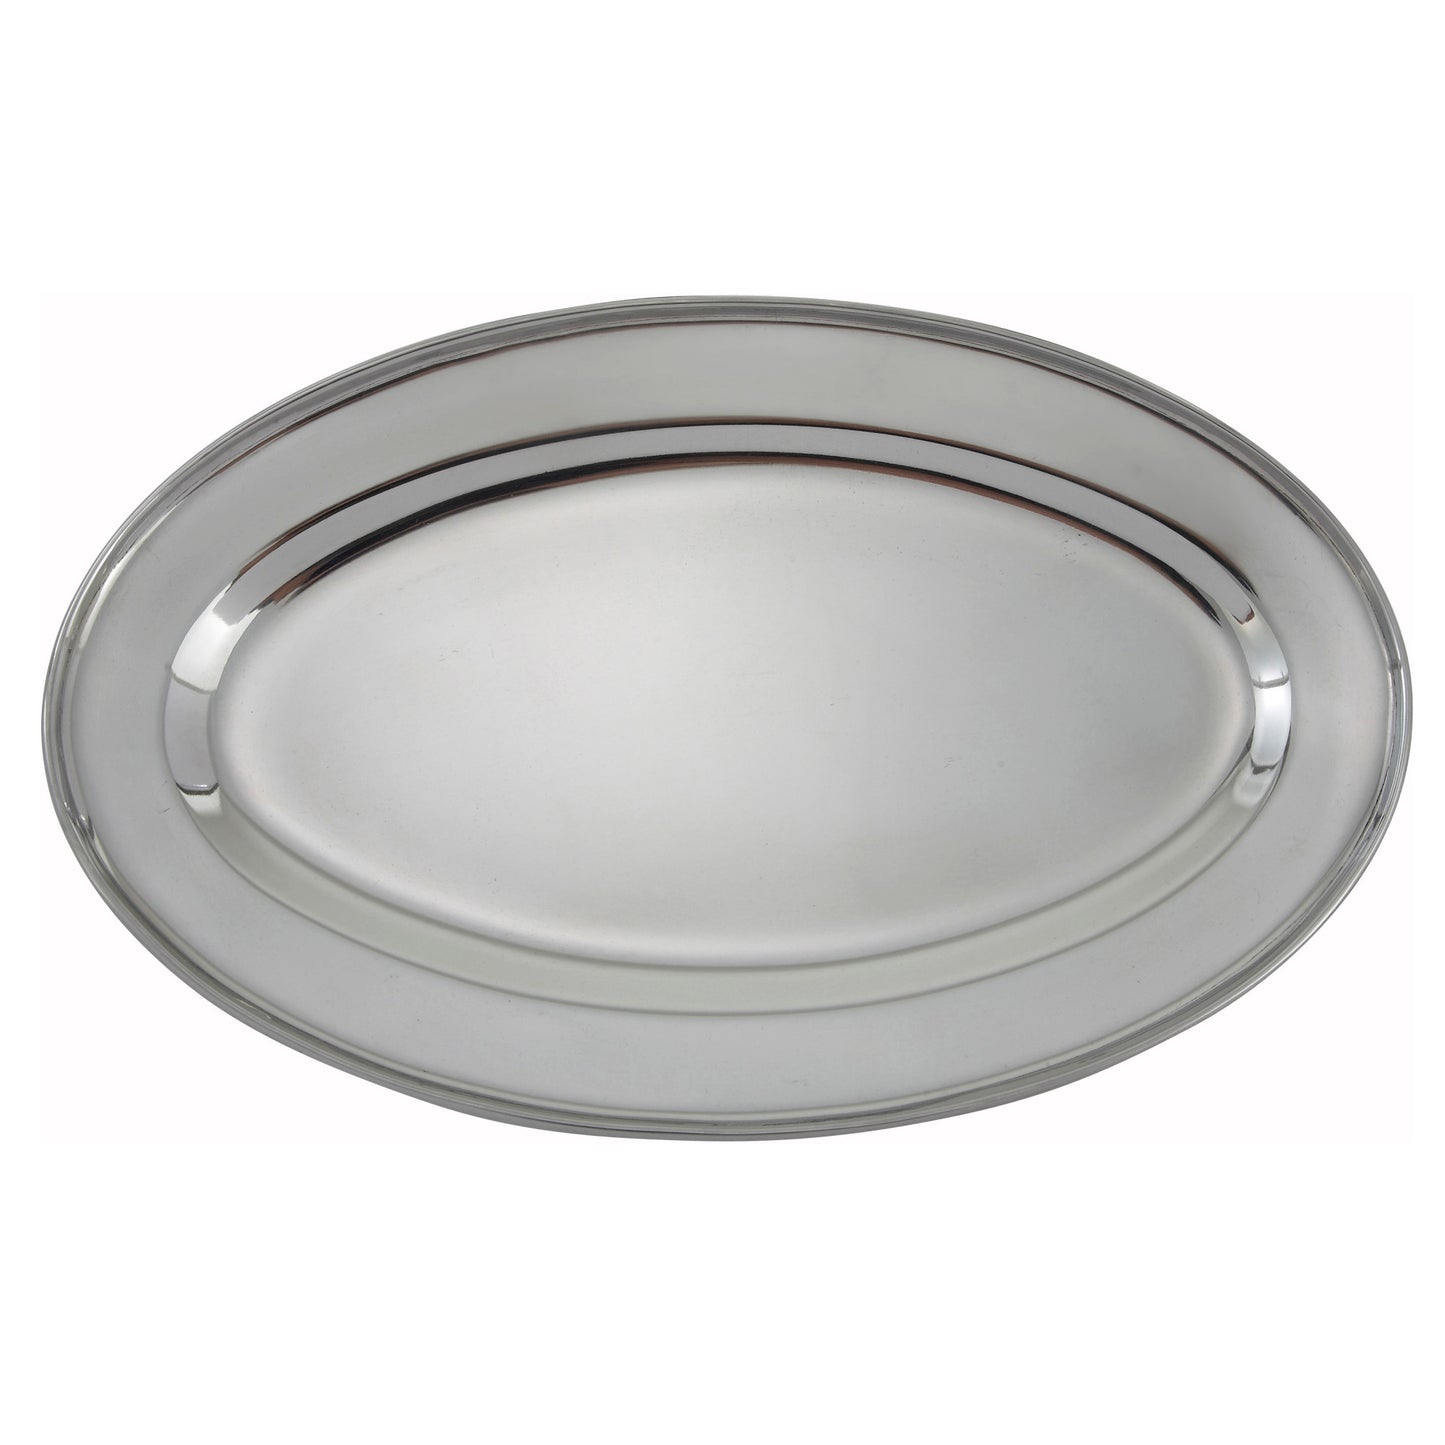 Oval Platter, Stainless Steel - 16"